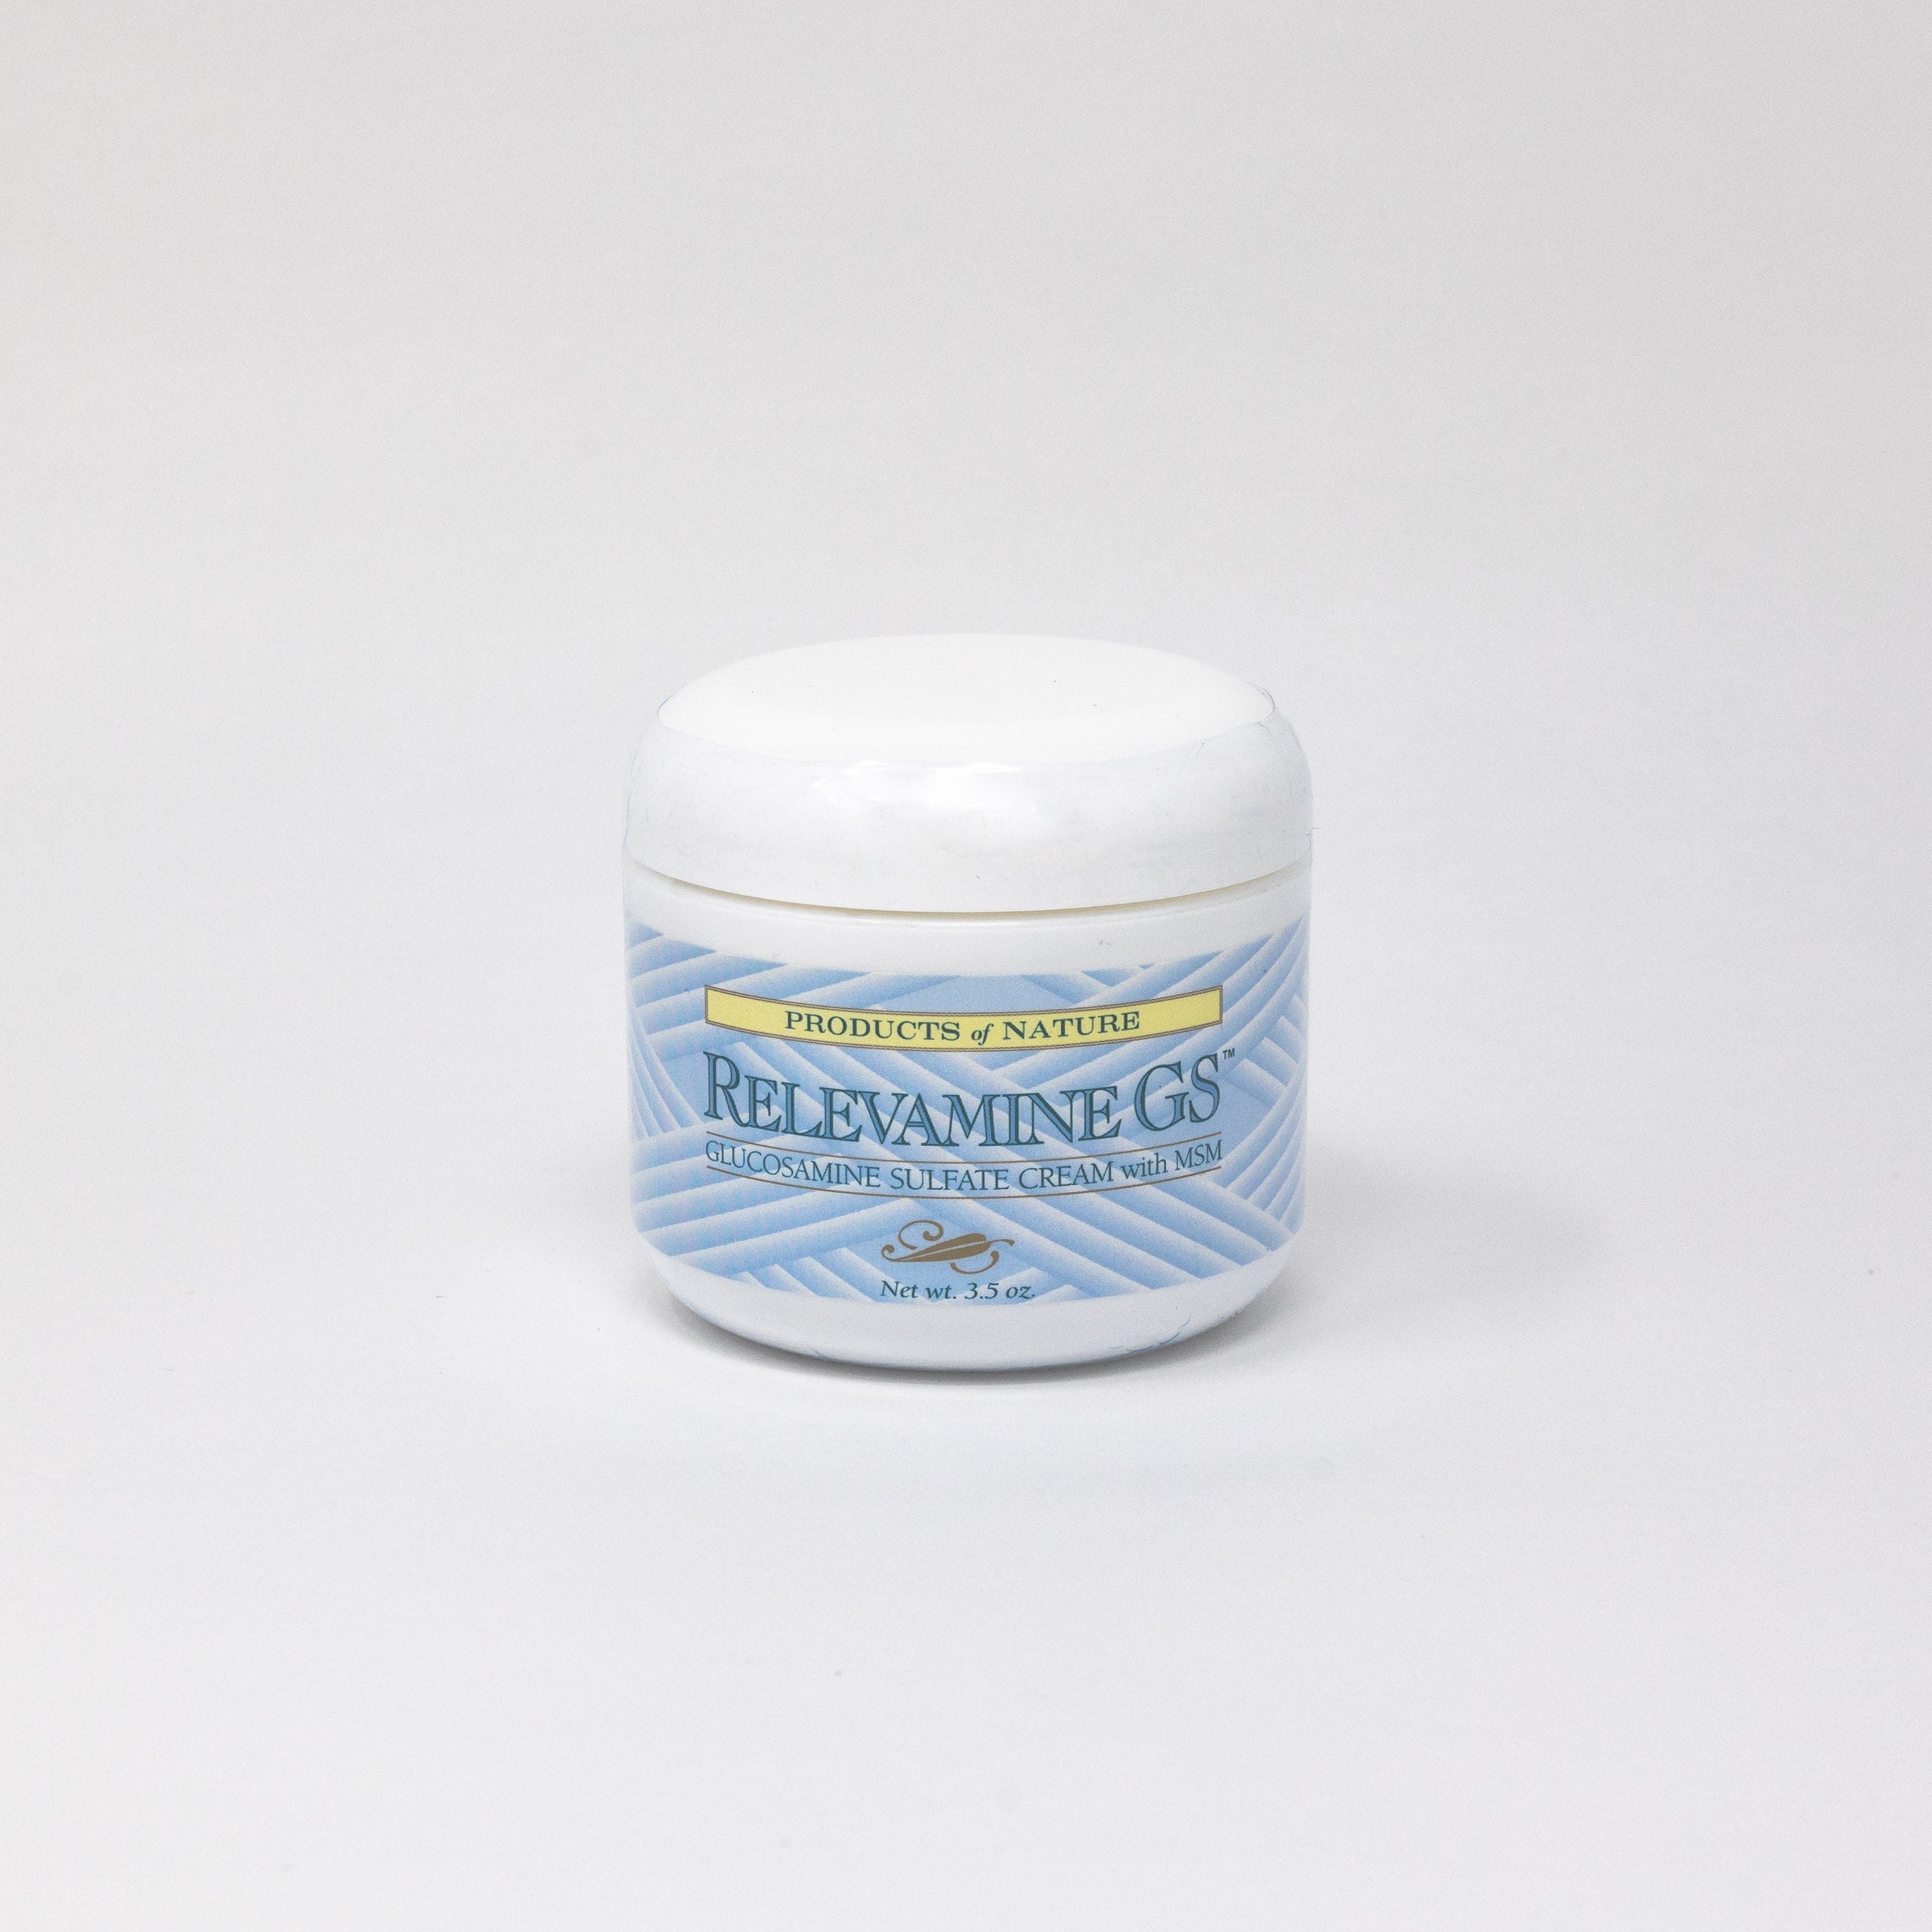 Relevamine GS Glucosamine Sulfate Cream with MSM - 3.5 oz.